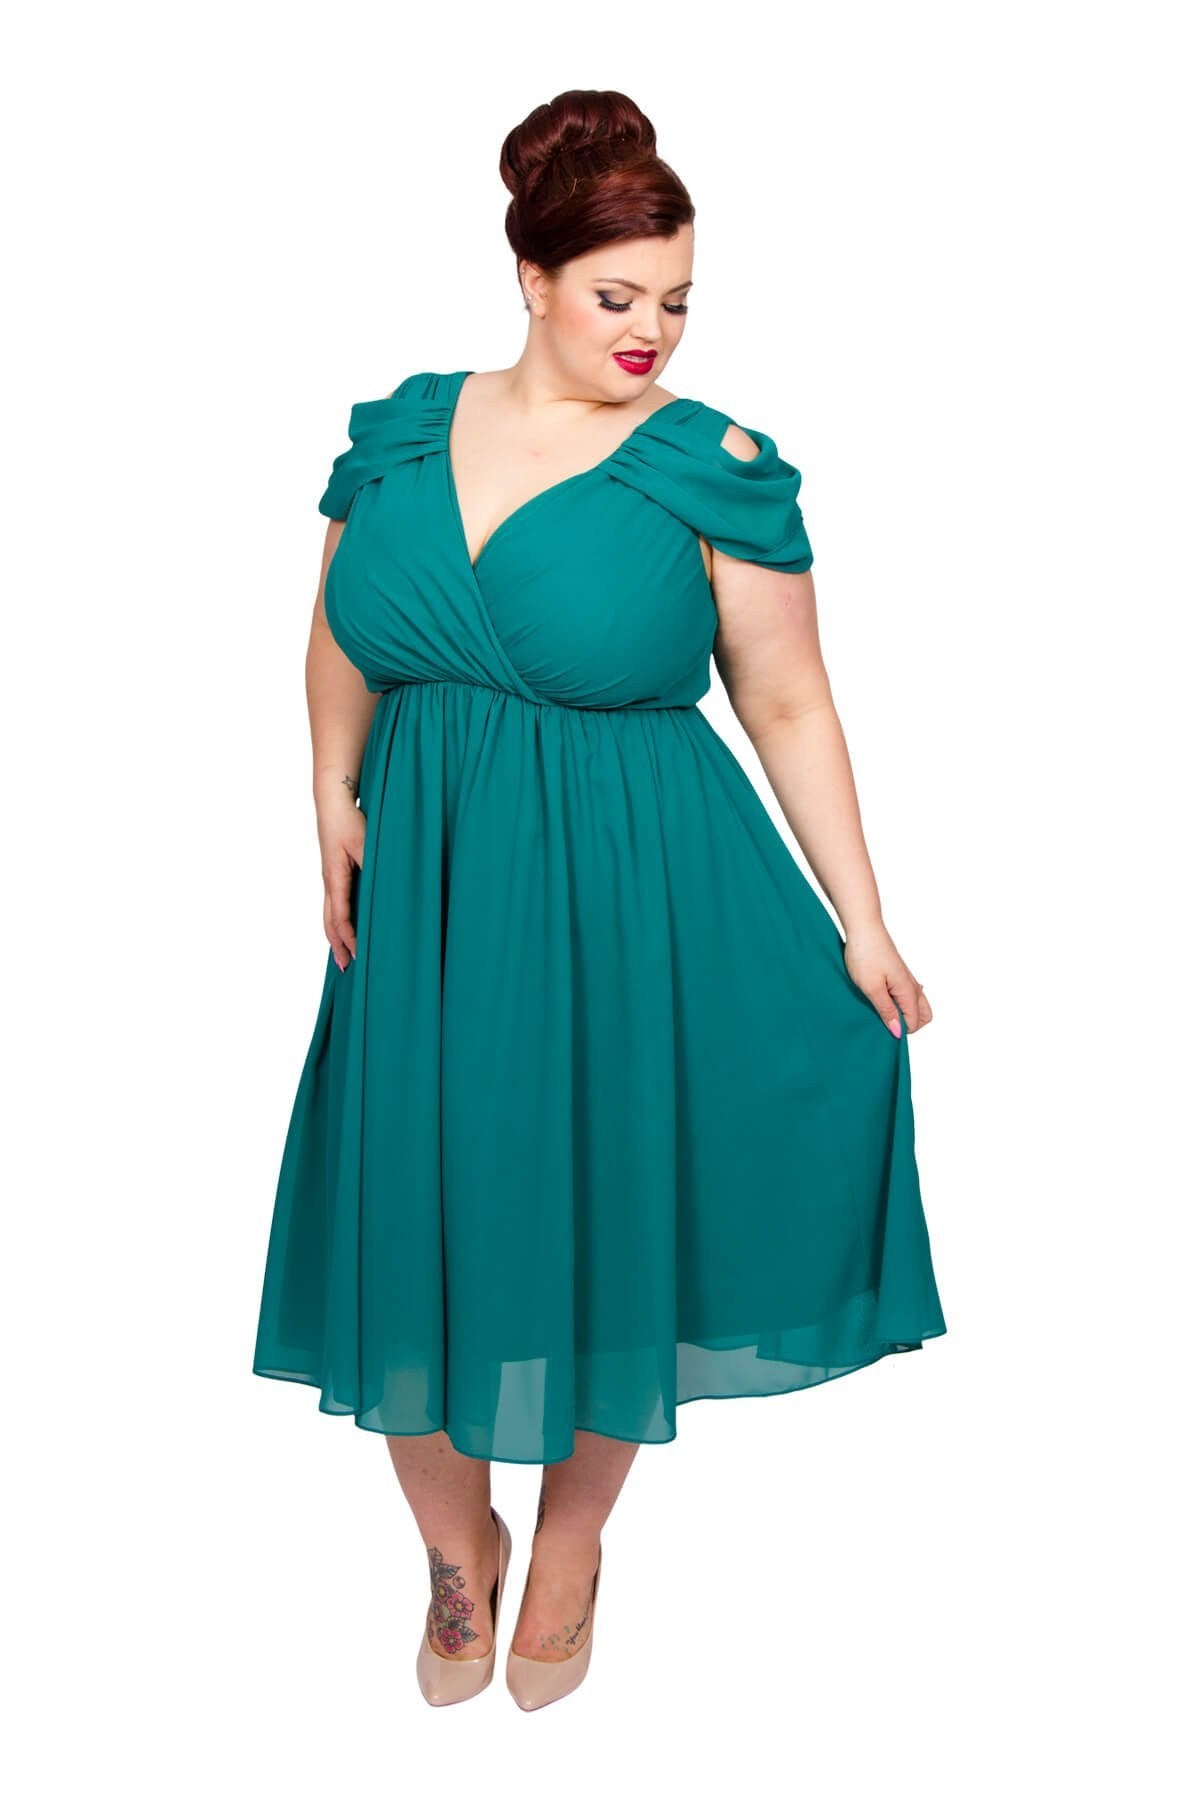 1950s Plus Size Dresses, Swing Dresses